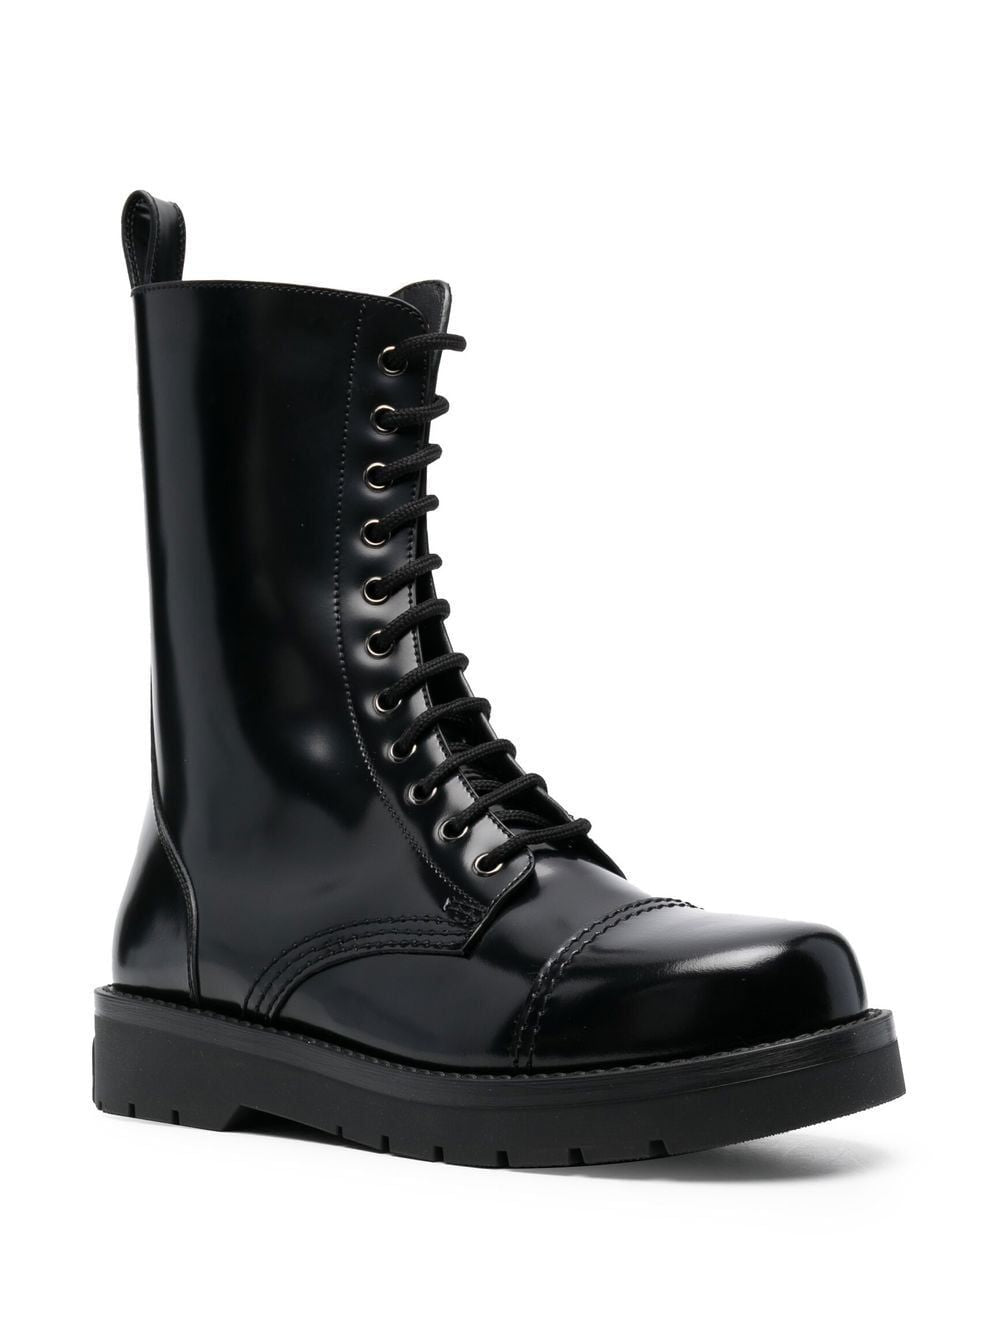 VALENTINO GARAVANI Stylish Black Combat Boots for Men - FW22 Collection